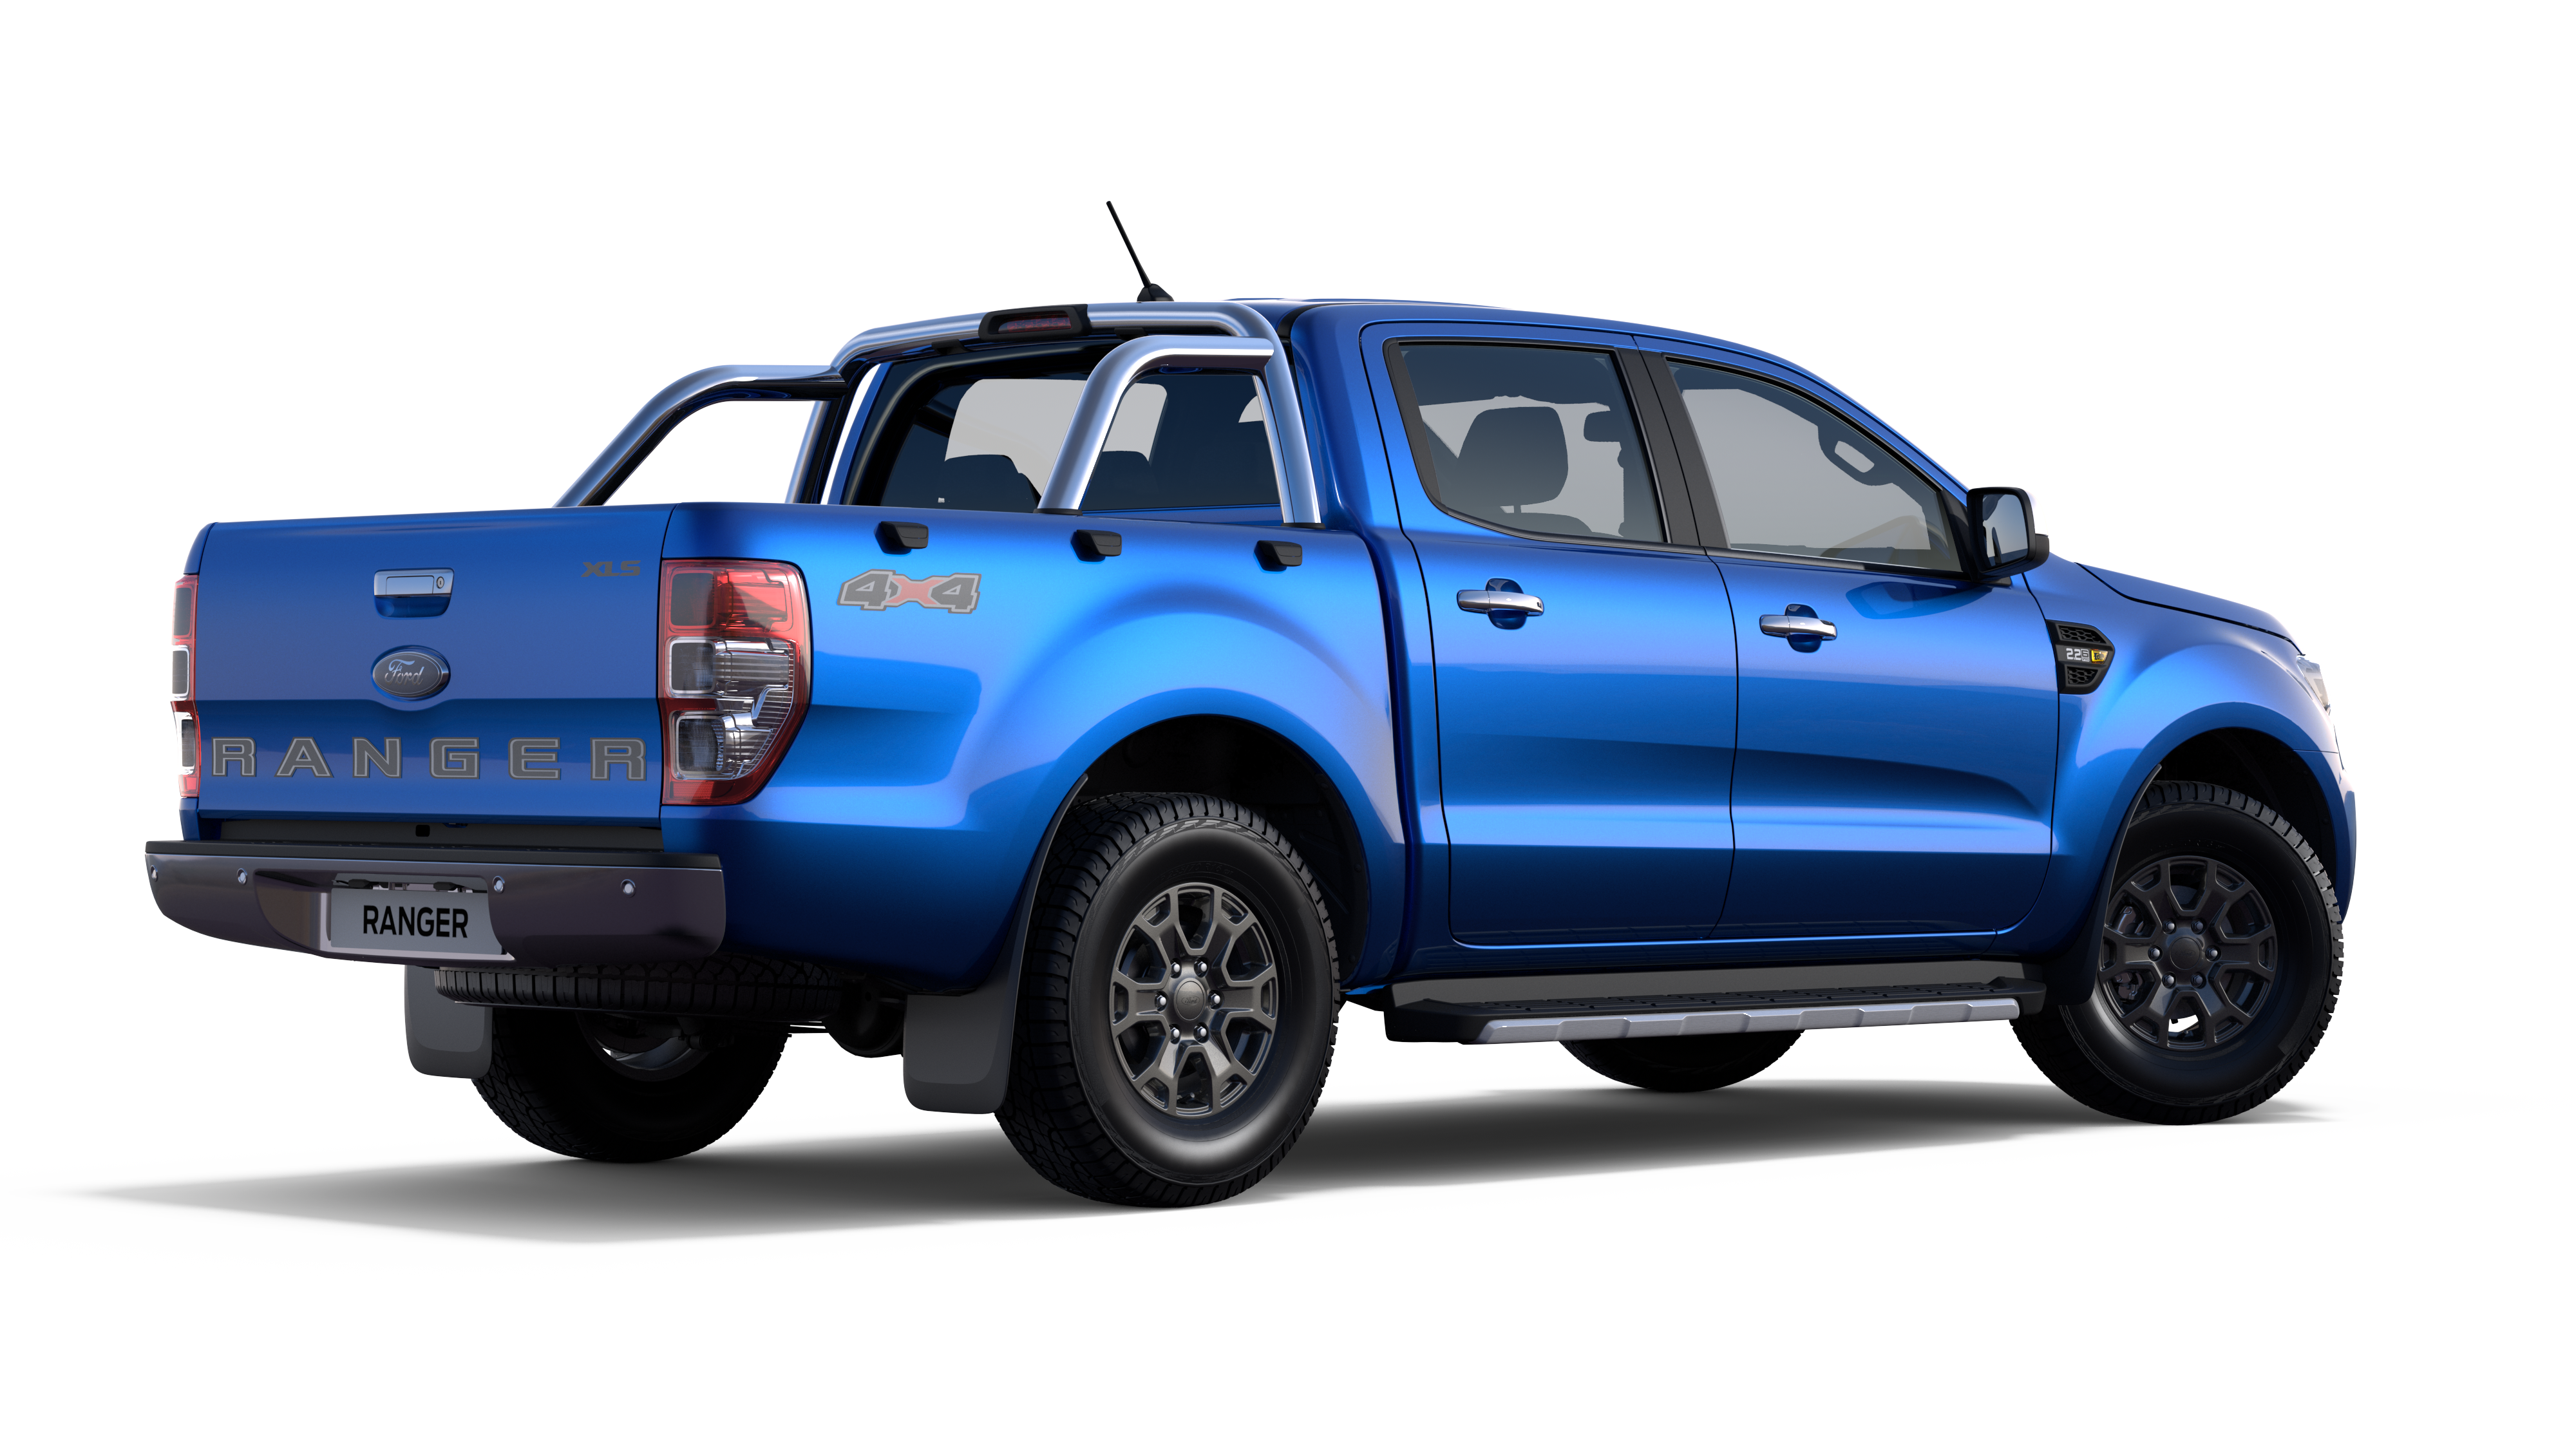 Ford Ranger XLS - Blue | Middle East | Ford Media Center